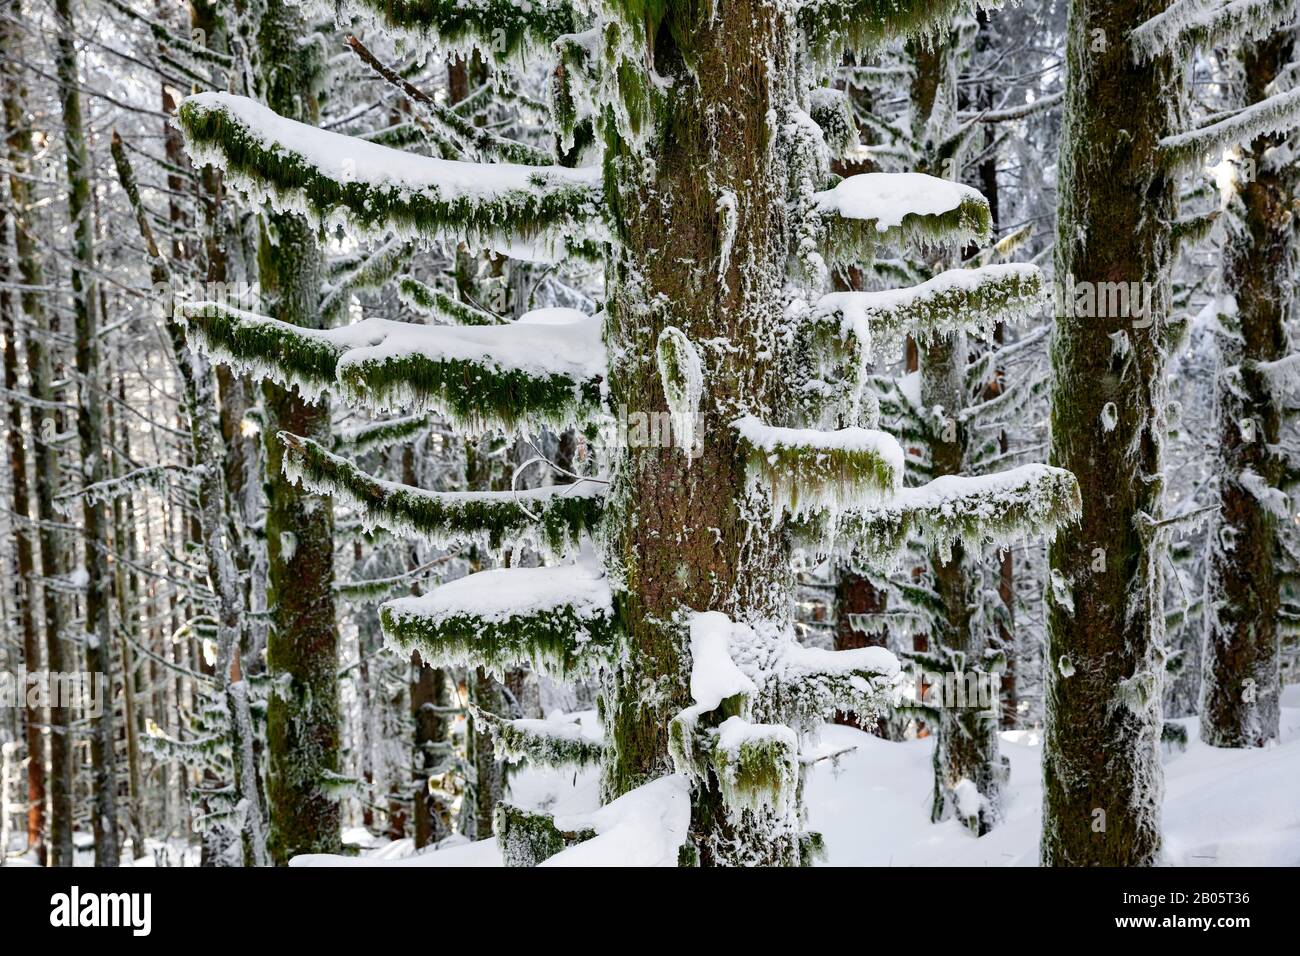 WA17174-00...WASHINGTON - Snow covered trees in the Isaquah Alps. Stock Photo